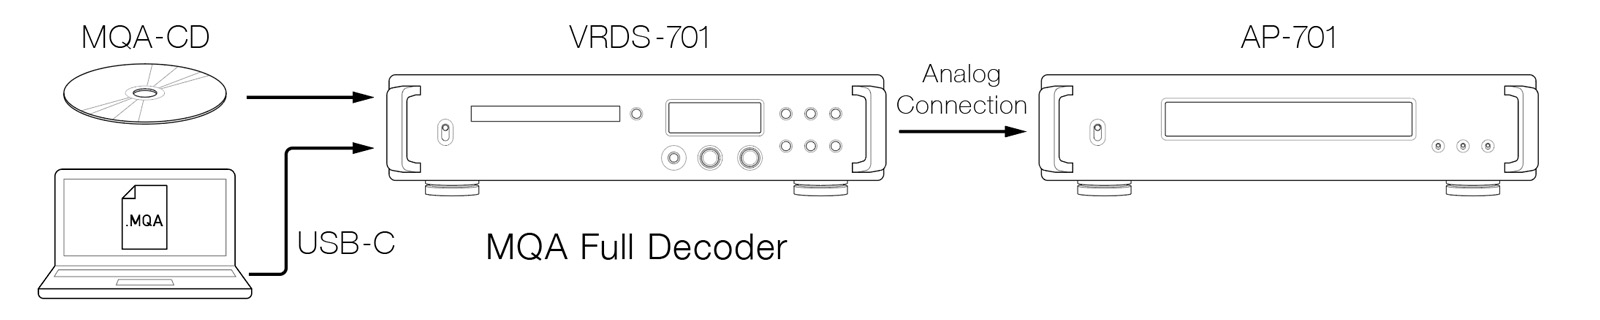 TEAC VRDS-701 CD player Vrds-701_mqa_decoding_en_pc